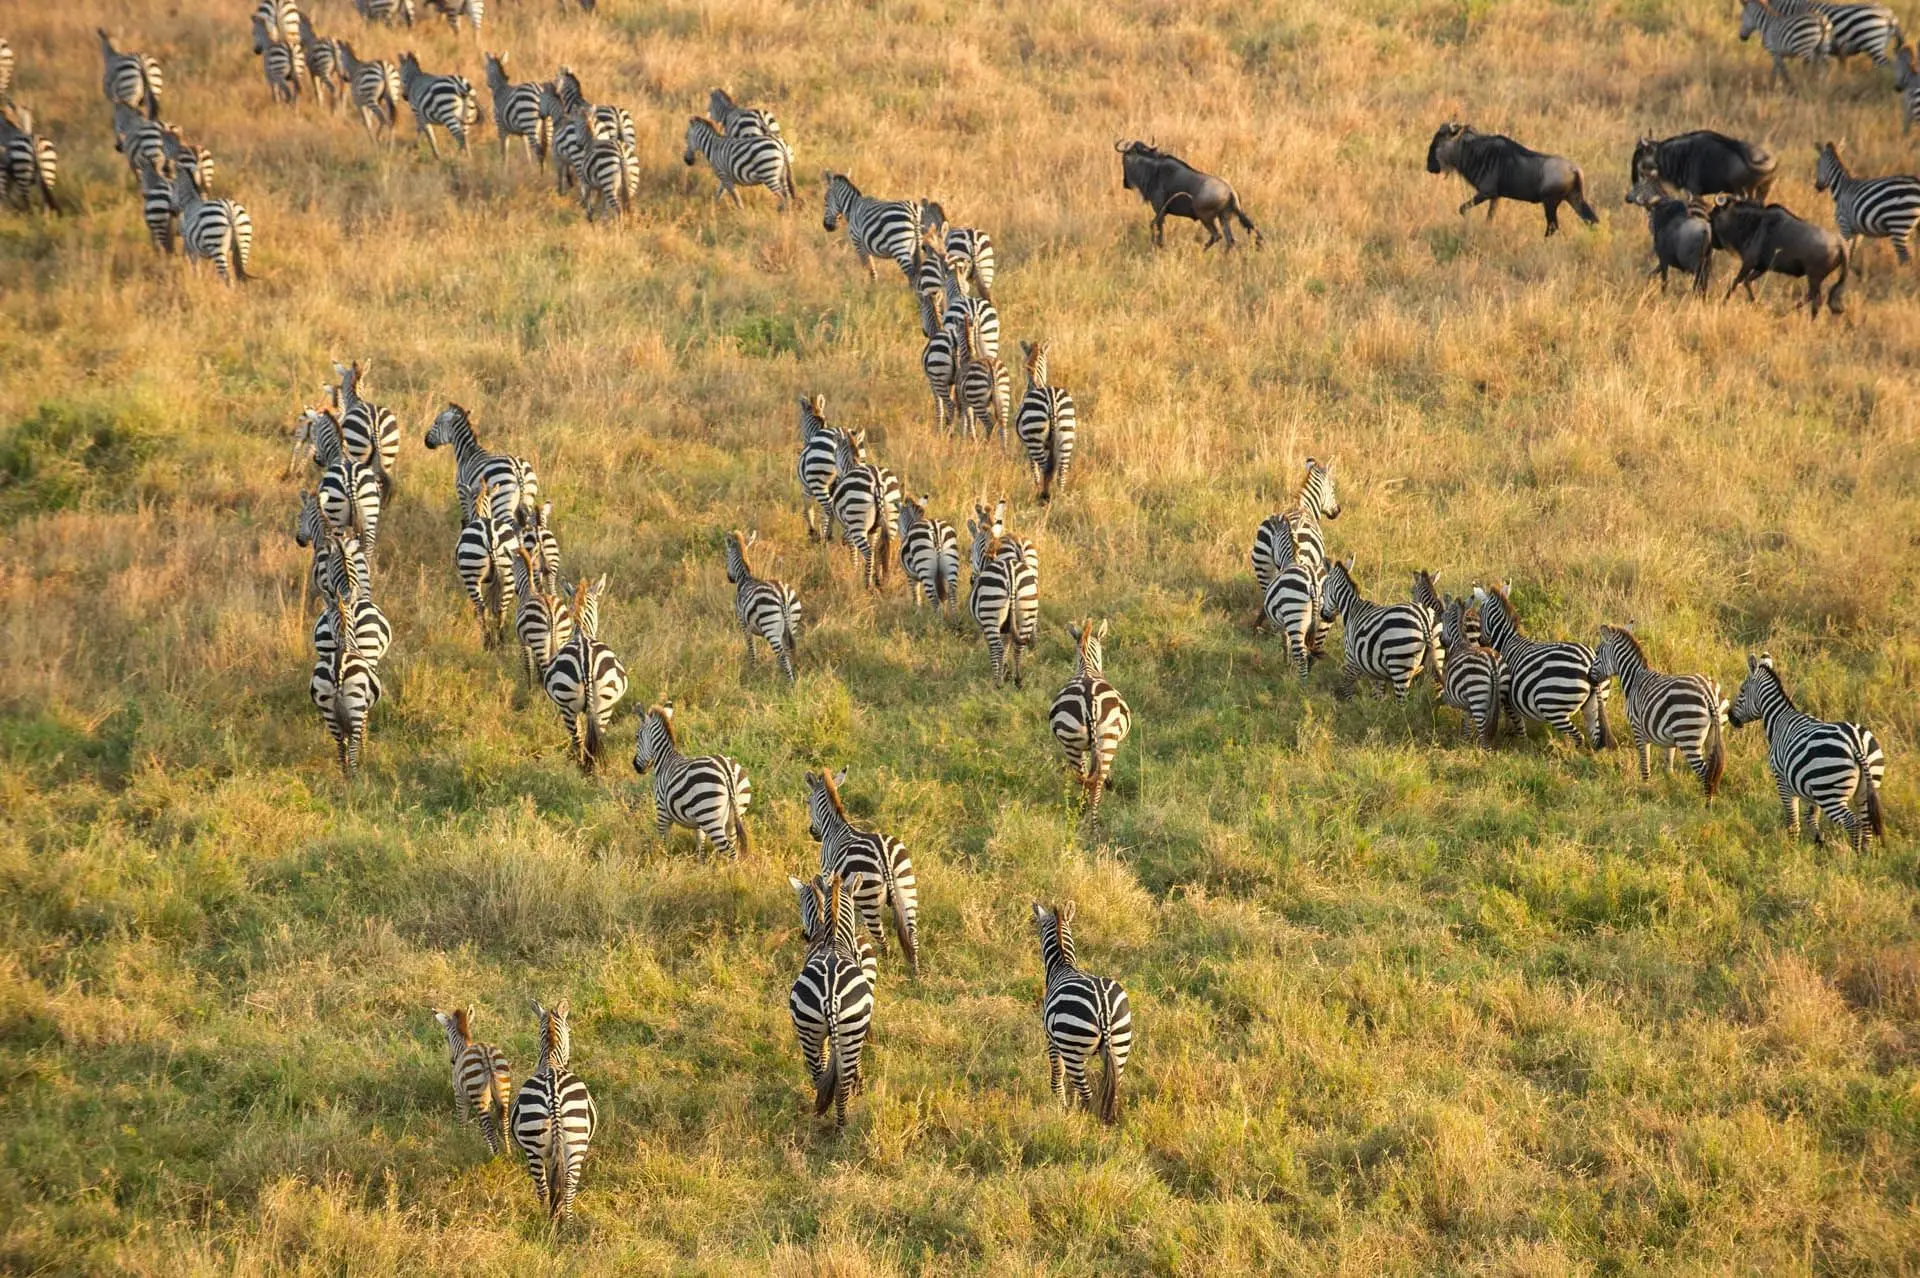 Tour to Serengeti National Park - Zebras in Serengeti